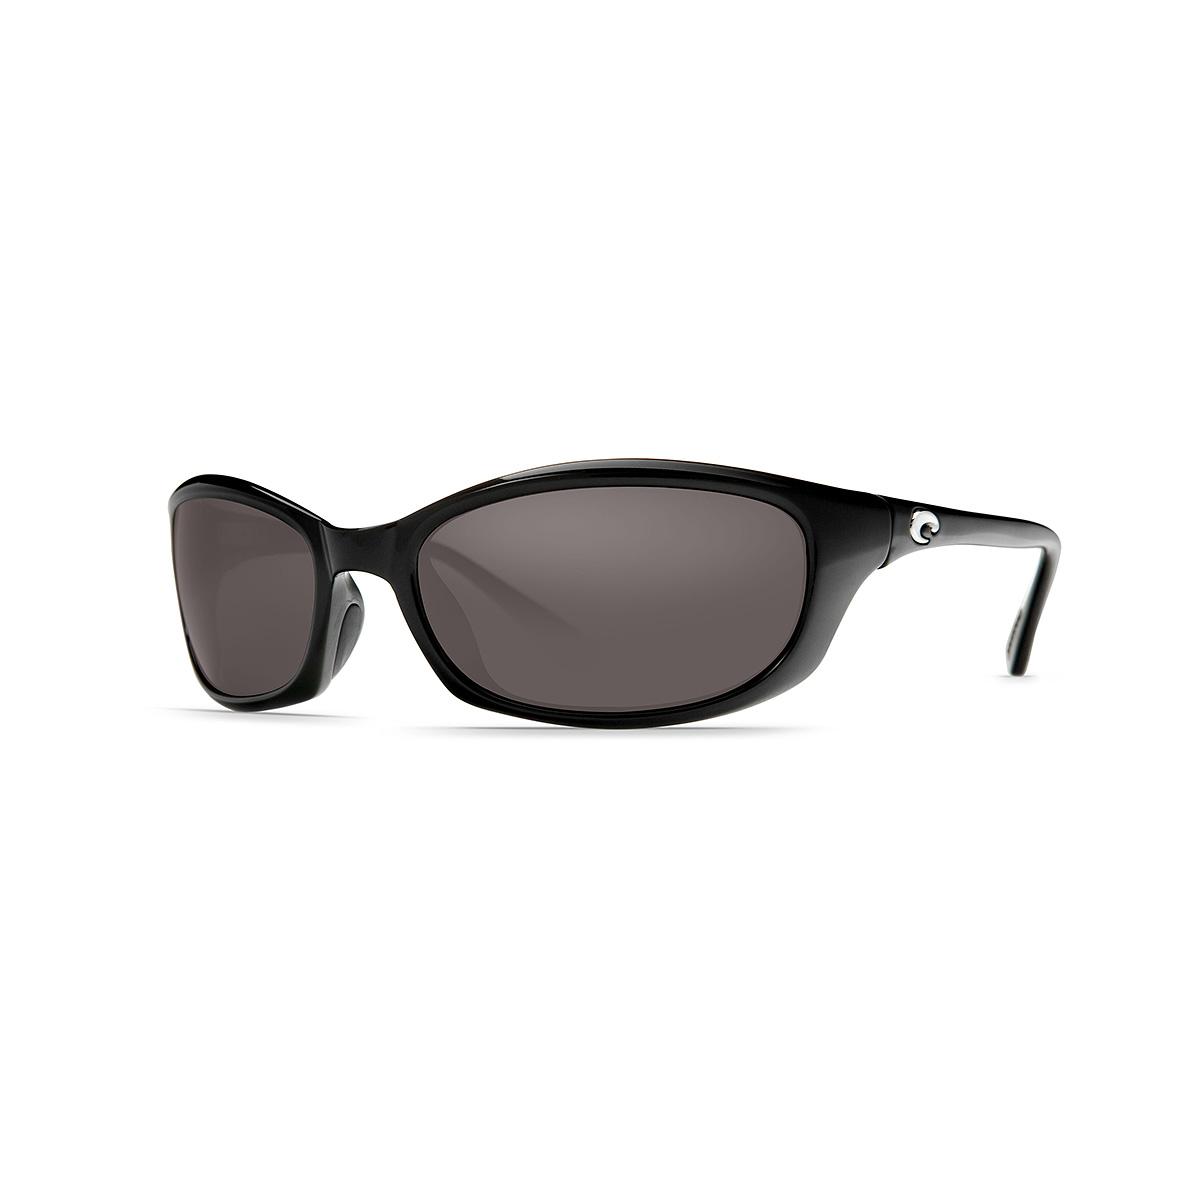  Harpoon 580p Sunglasses - Polarized Plastic